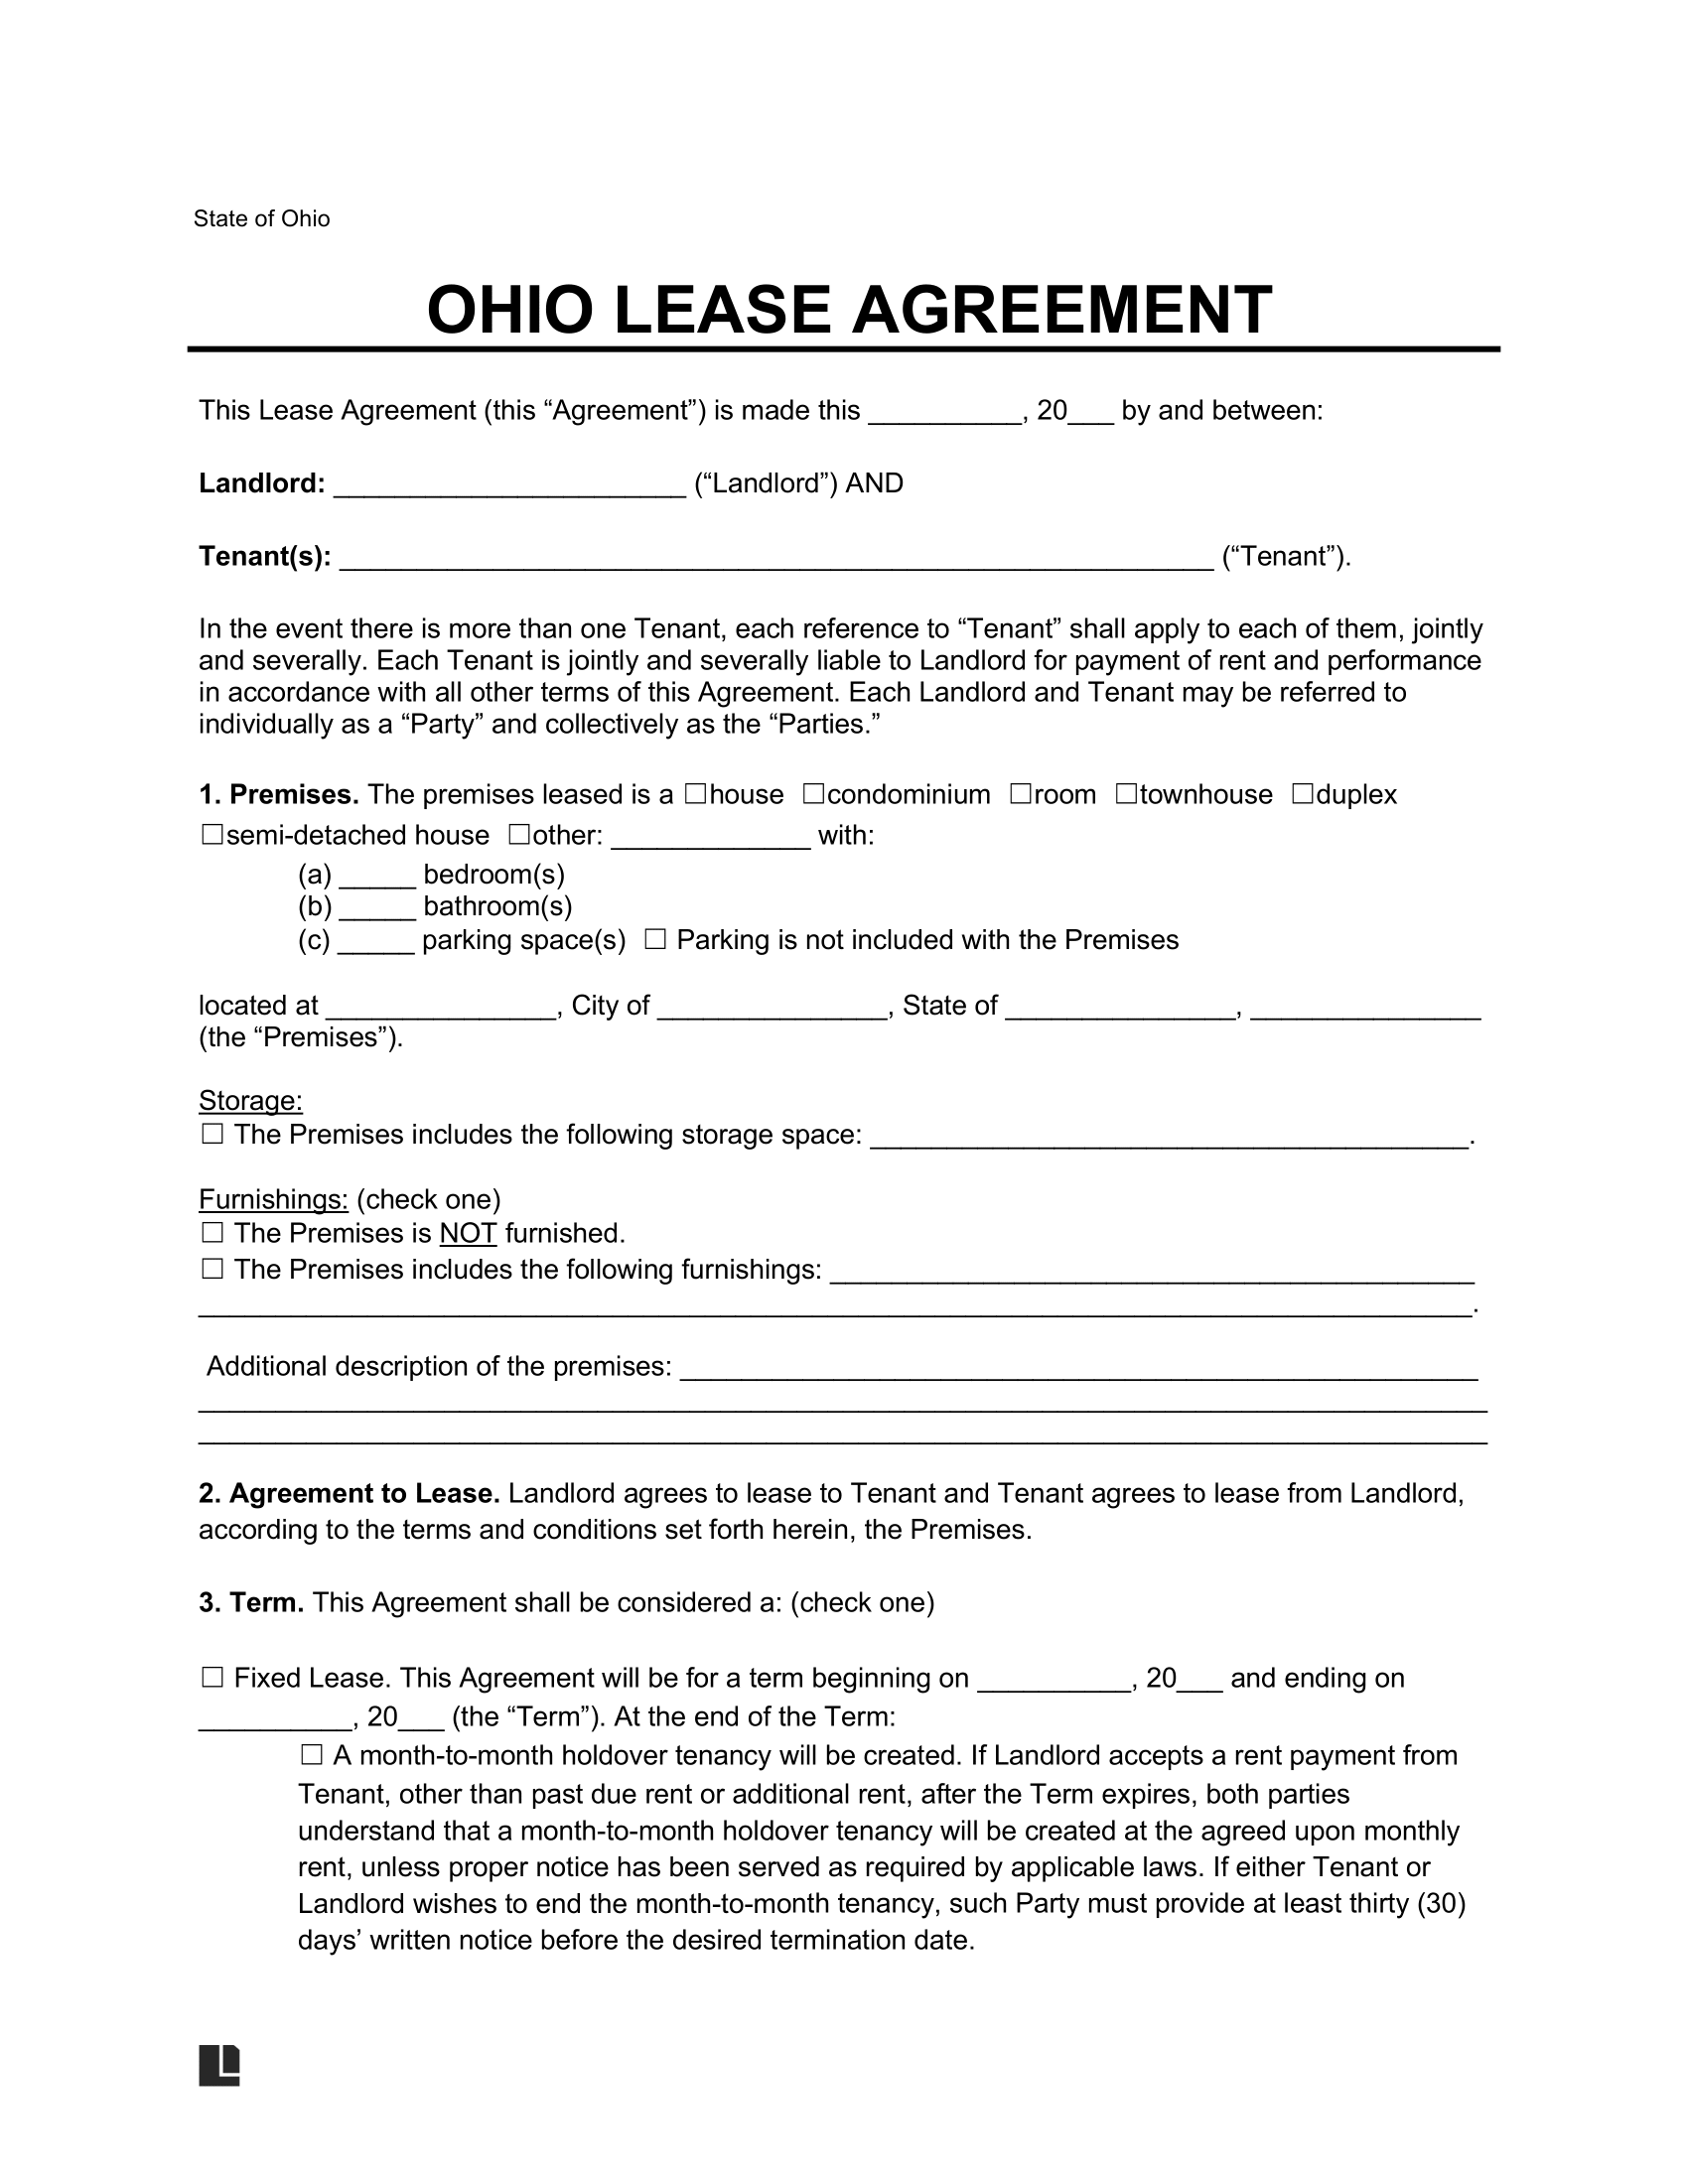 Ohio Lease Agreement Template